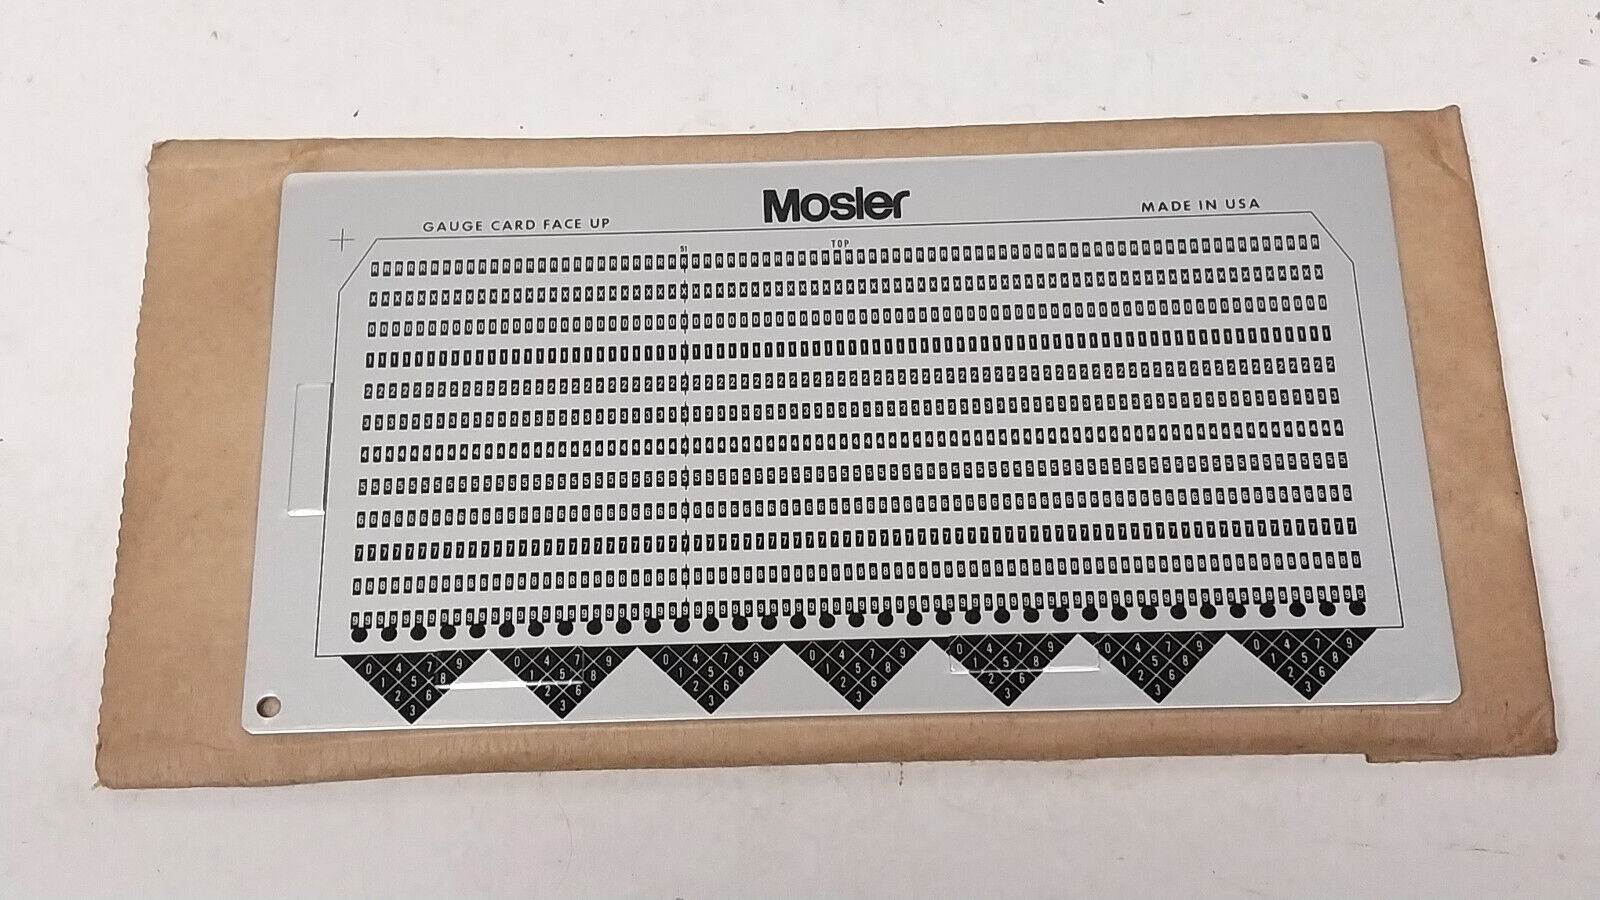 New Unused Mosler 80 Column IBM Card Template Gauge / Old Mainframe Computer